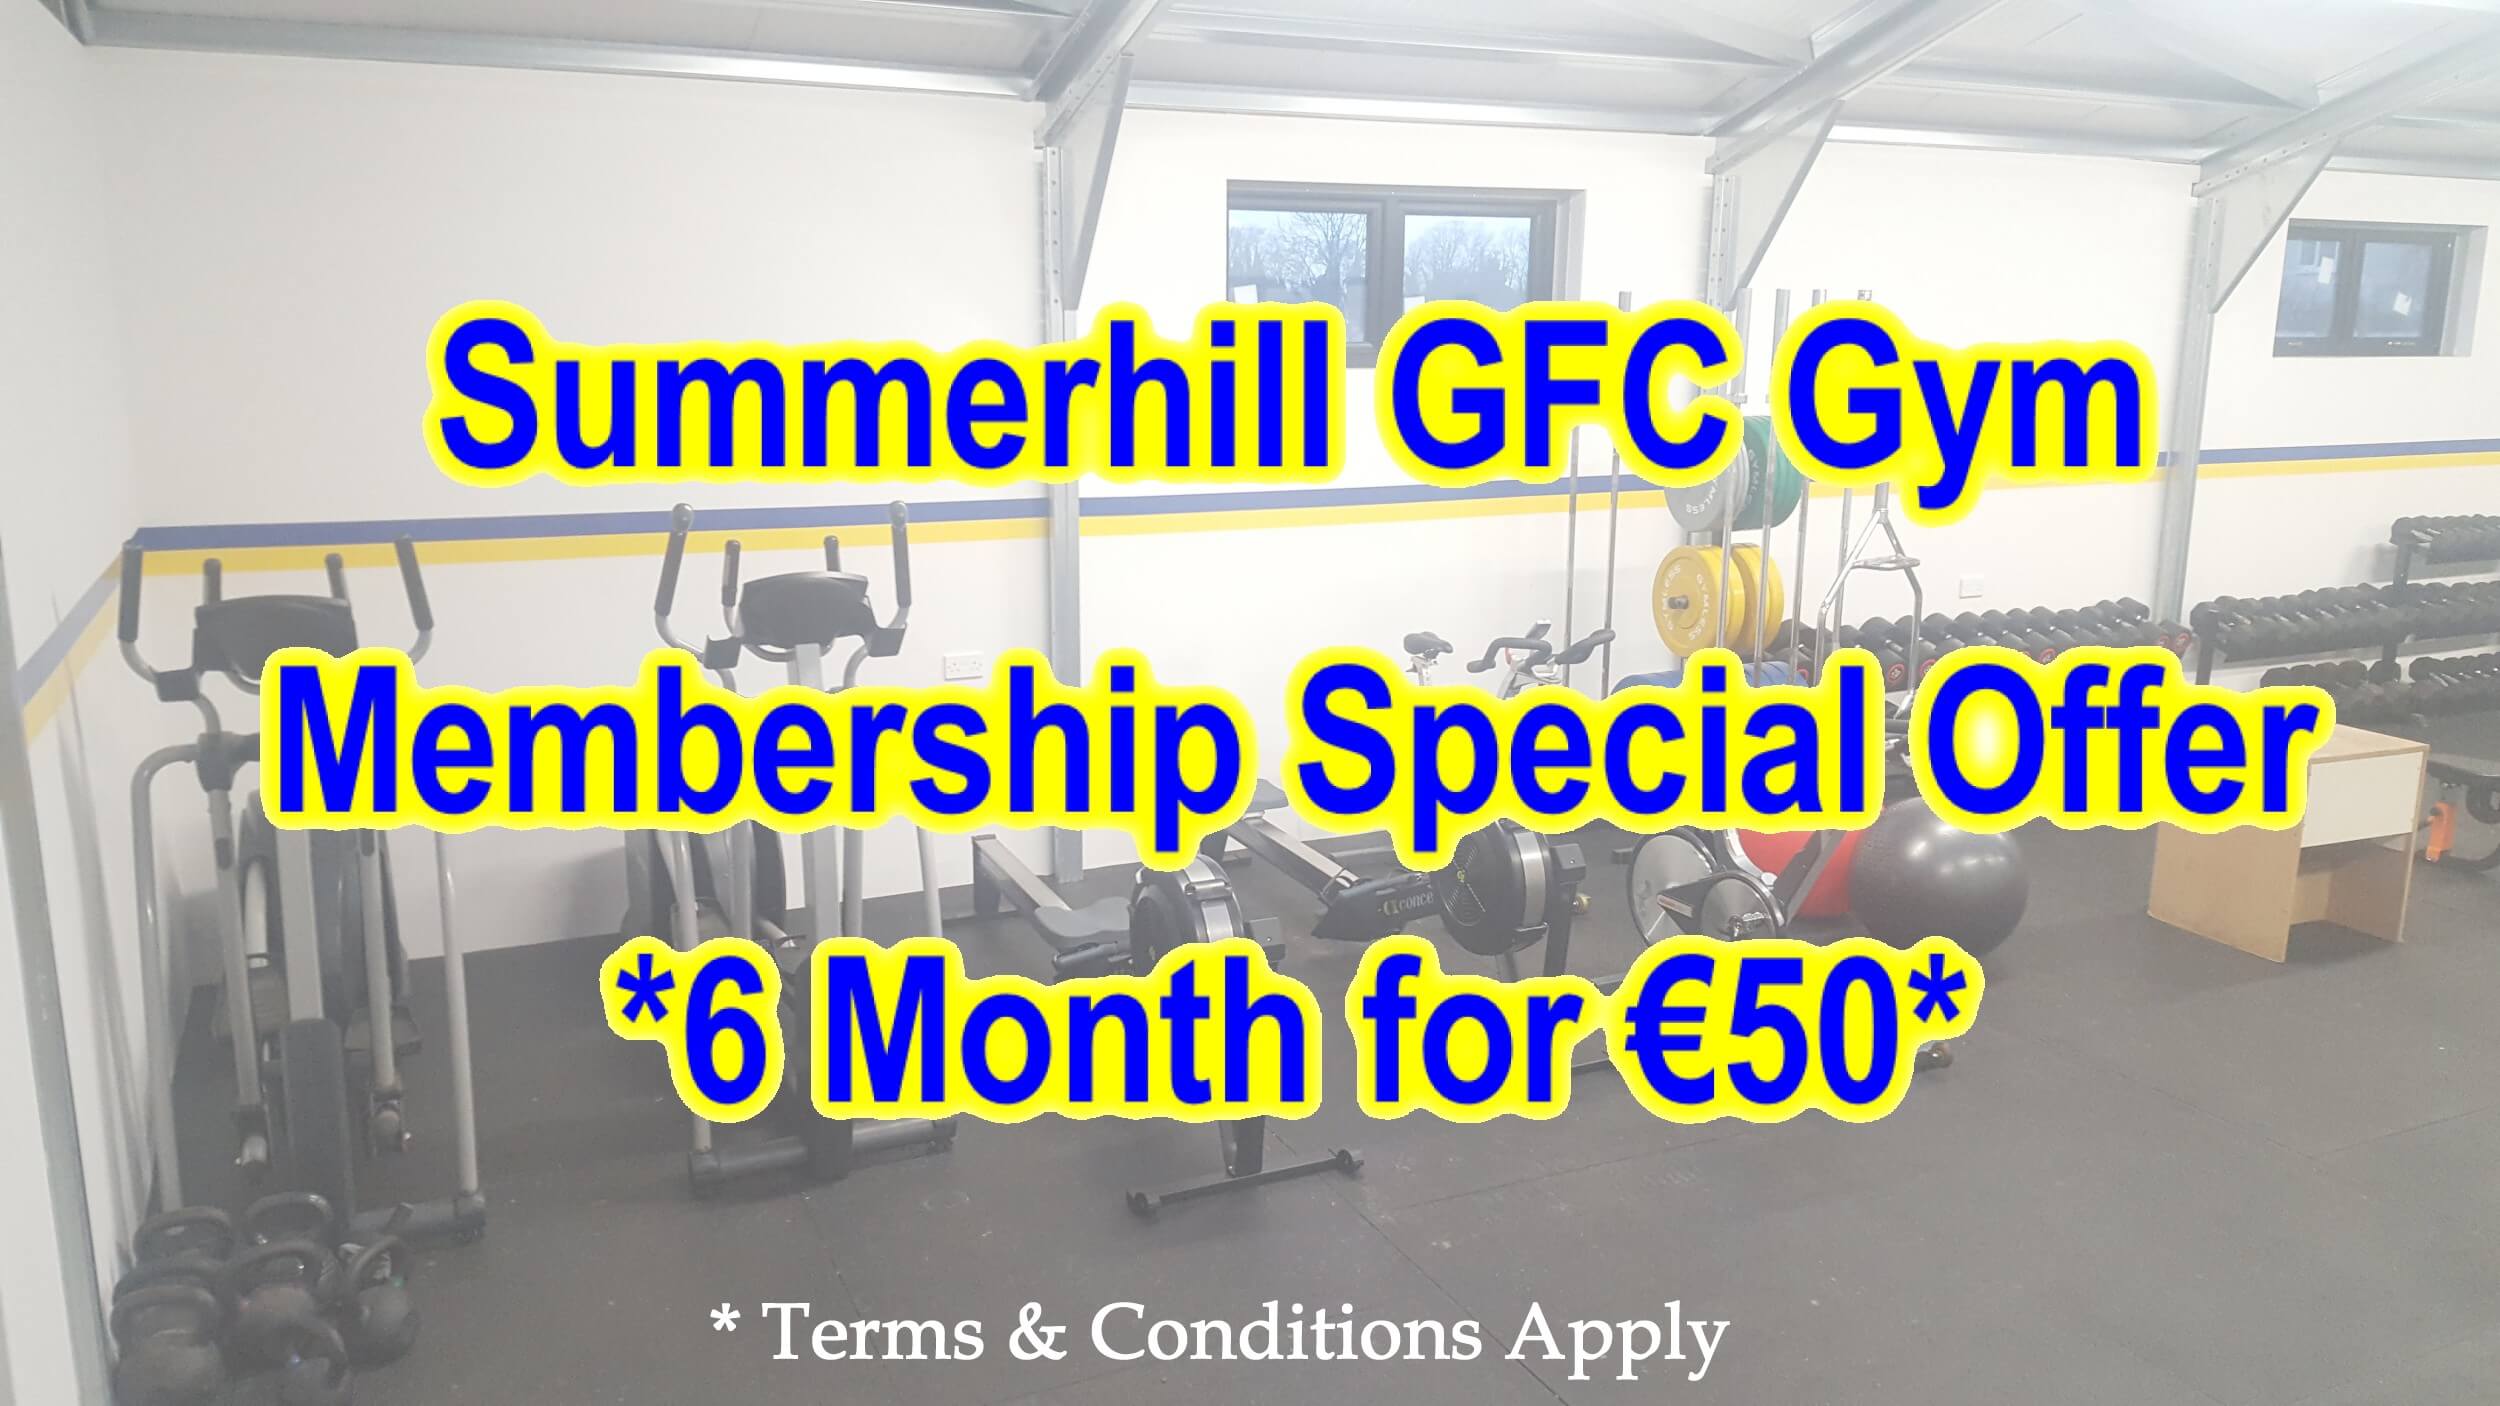 Gym Membership - Summerhill GFC